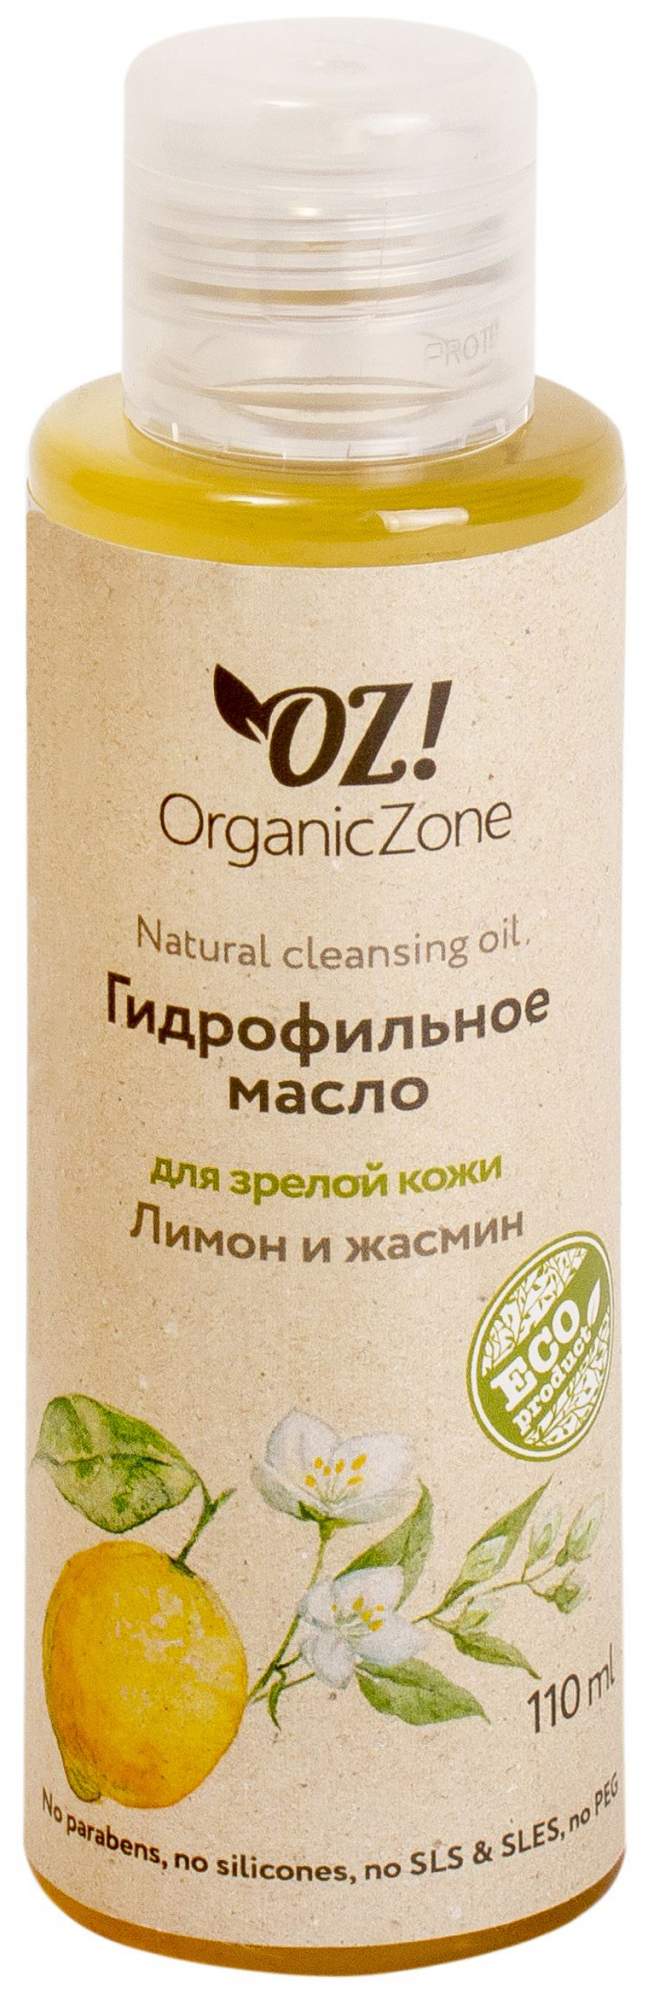 Масло для лица OrganicZone Лимон и жасмин 110 мл